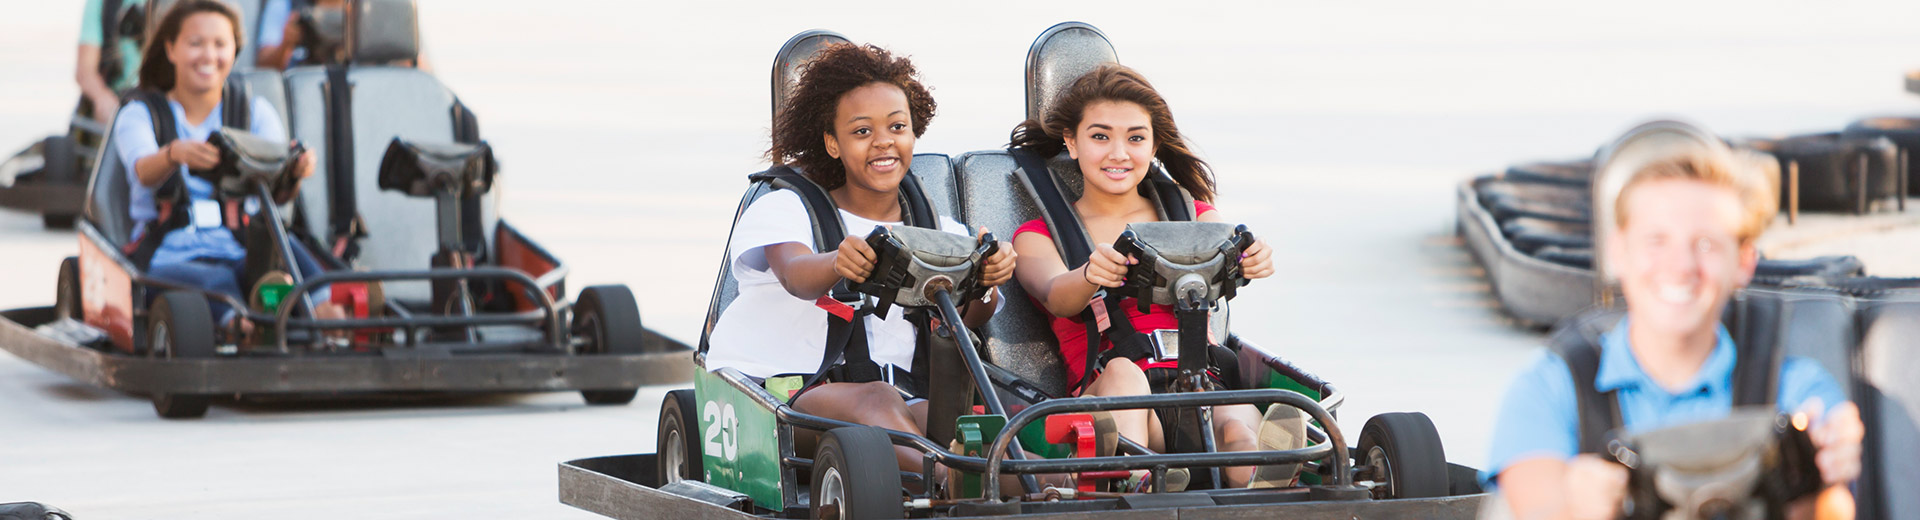 Go Karts | Adventure Landing Family Entertainment Center | St. Augustine, FL